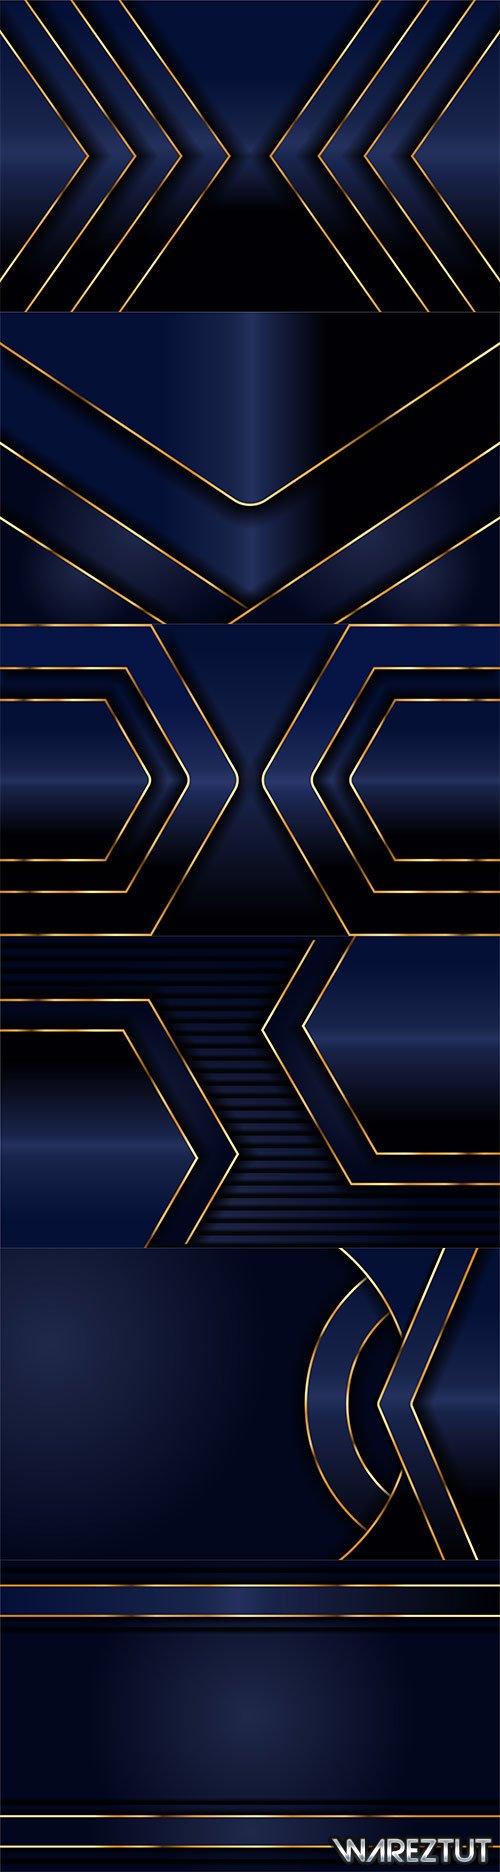 Dark blue vector backgrounds with golden lines